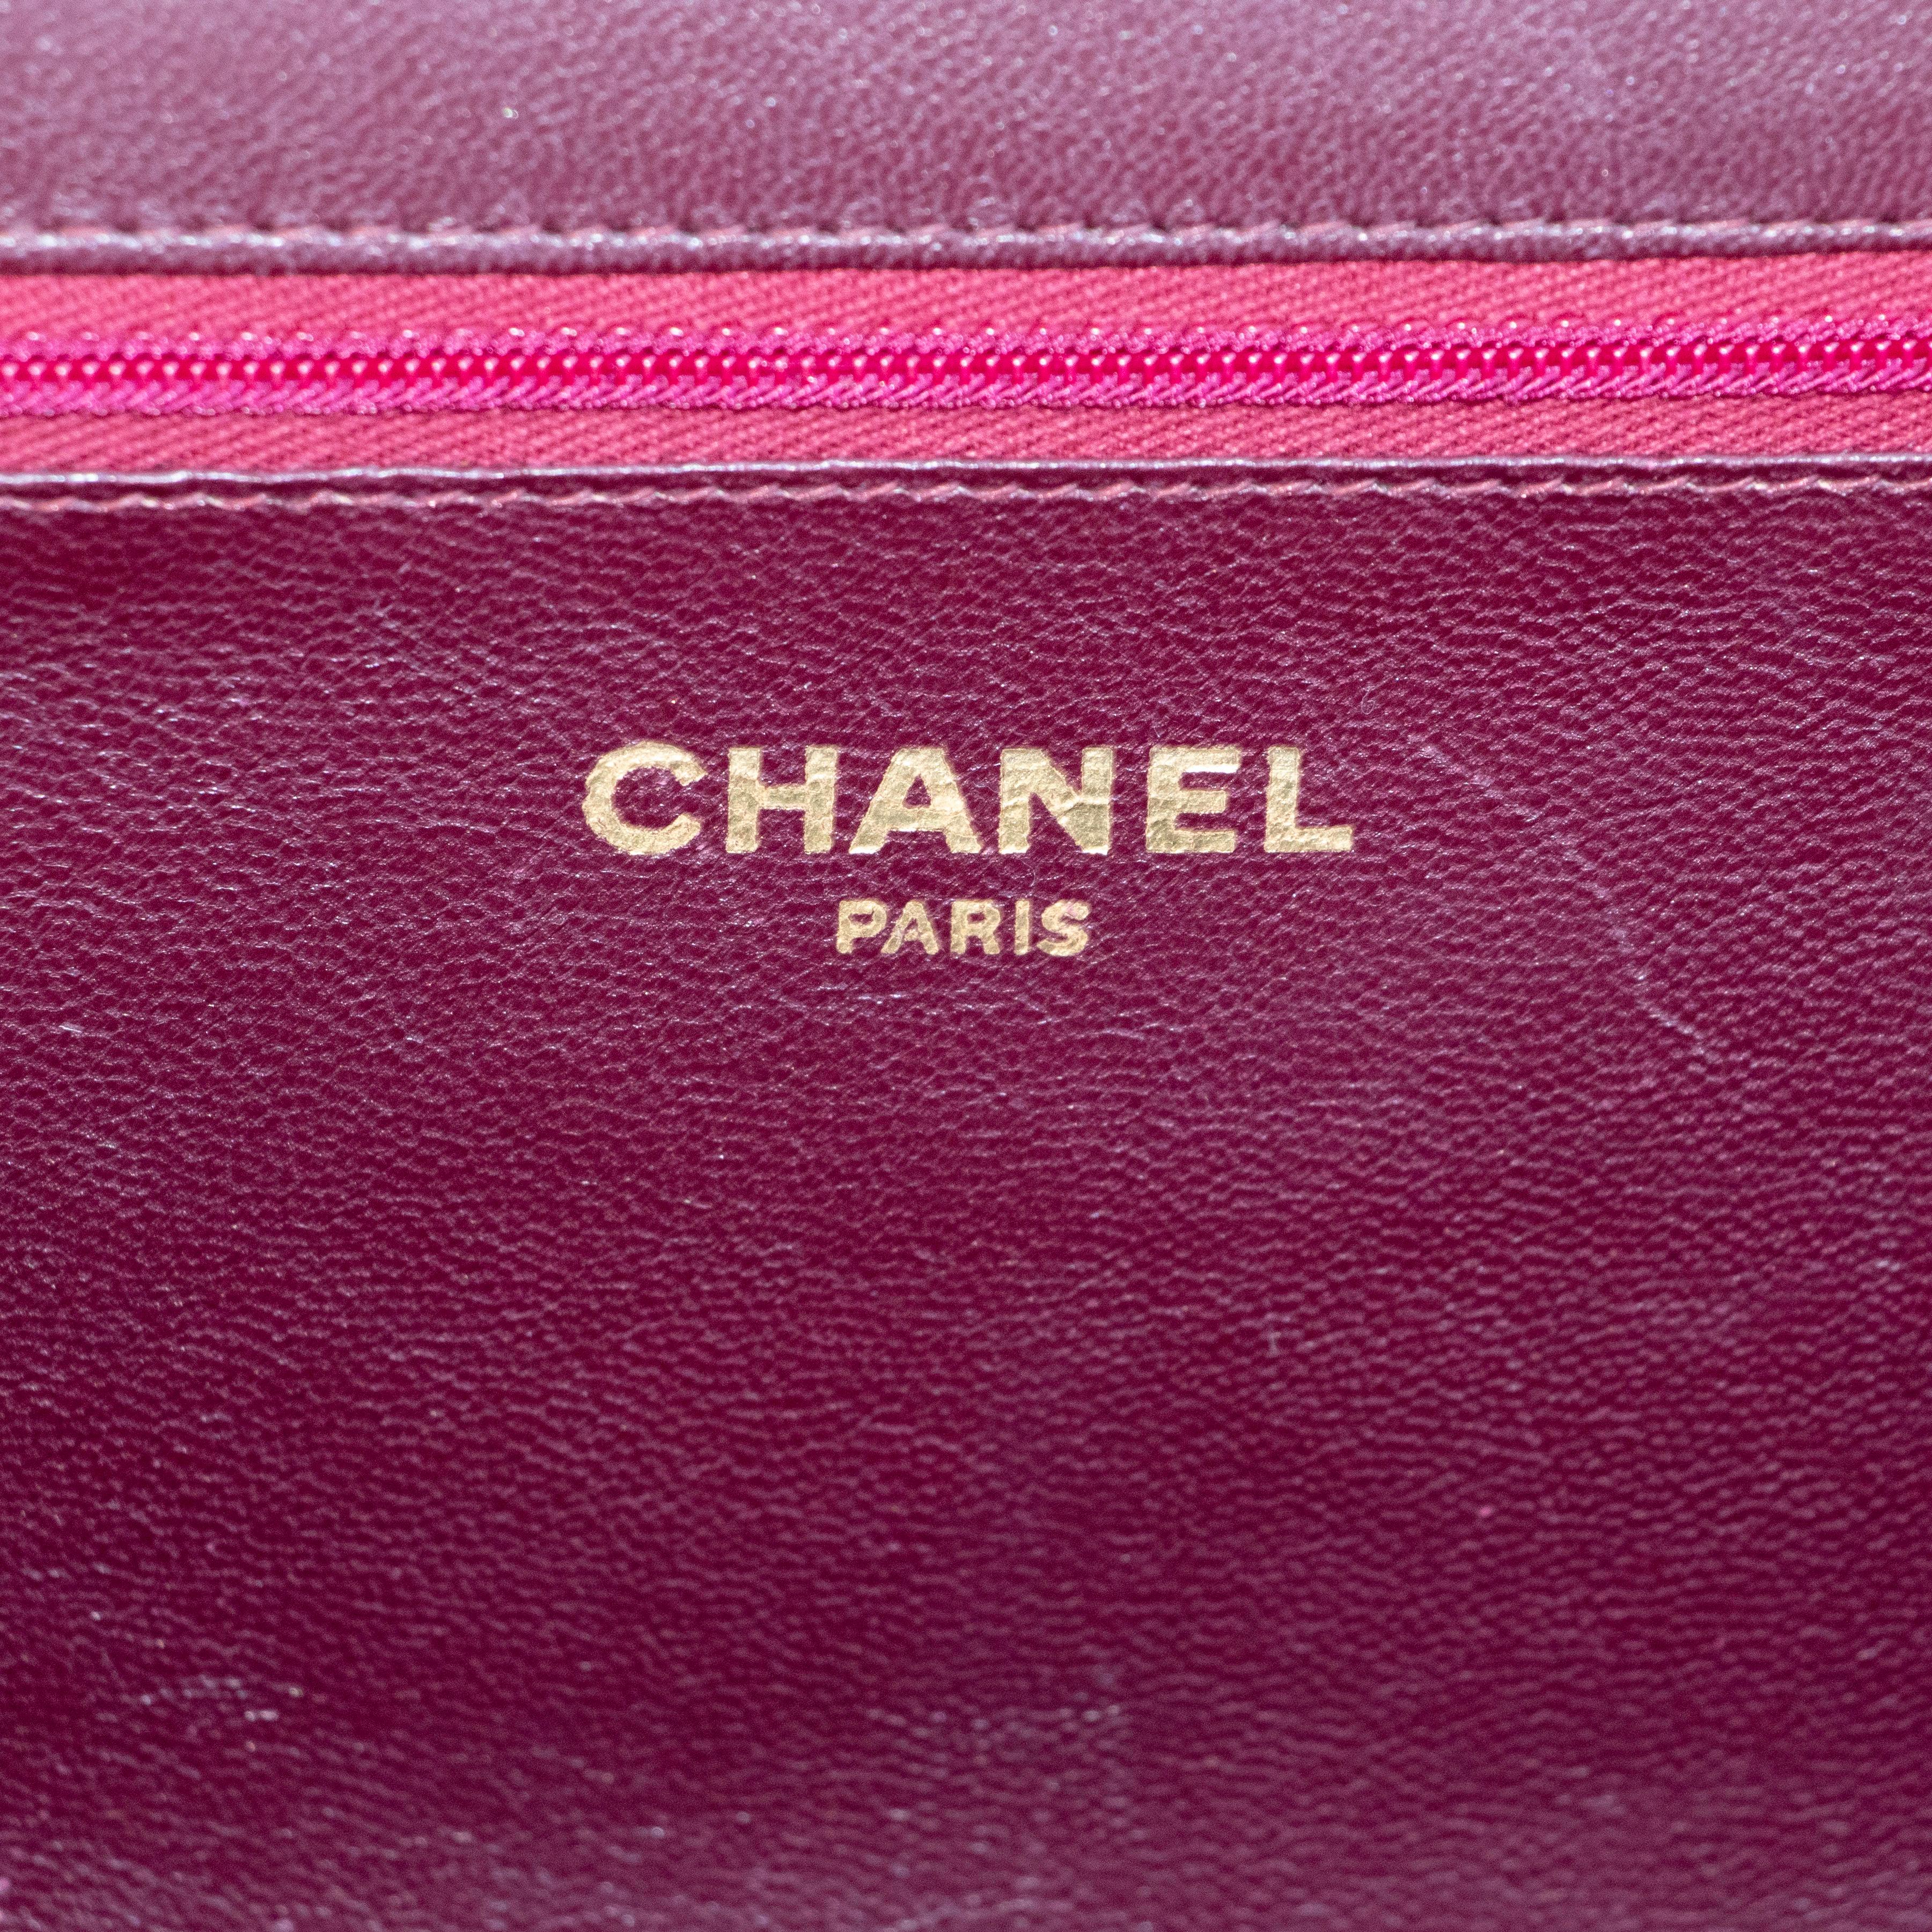 Vintage Brown Chanel Handbag with Gold-Colored Strap 4